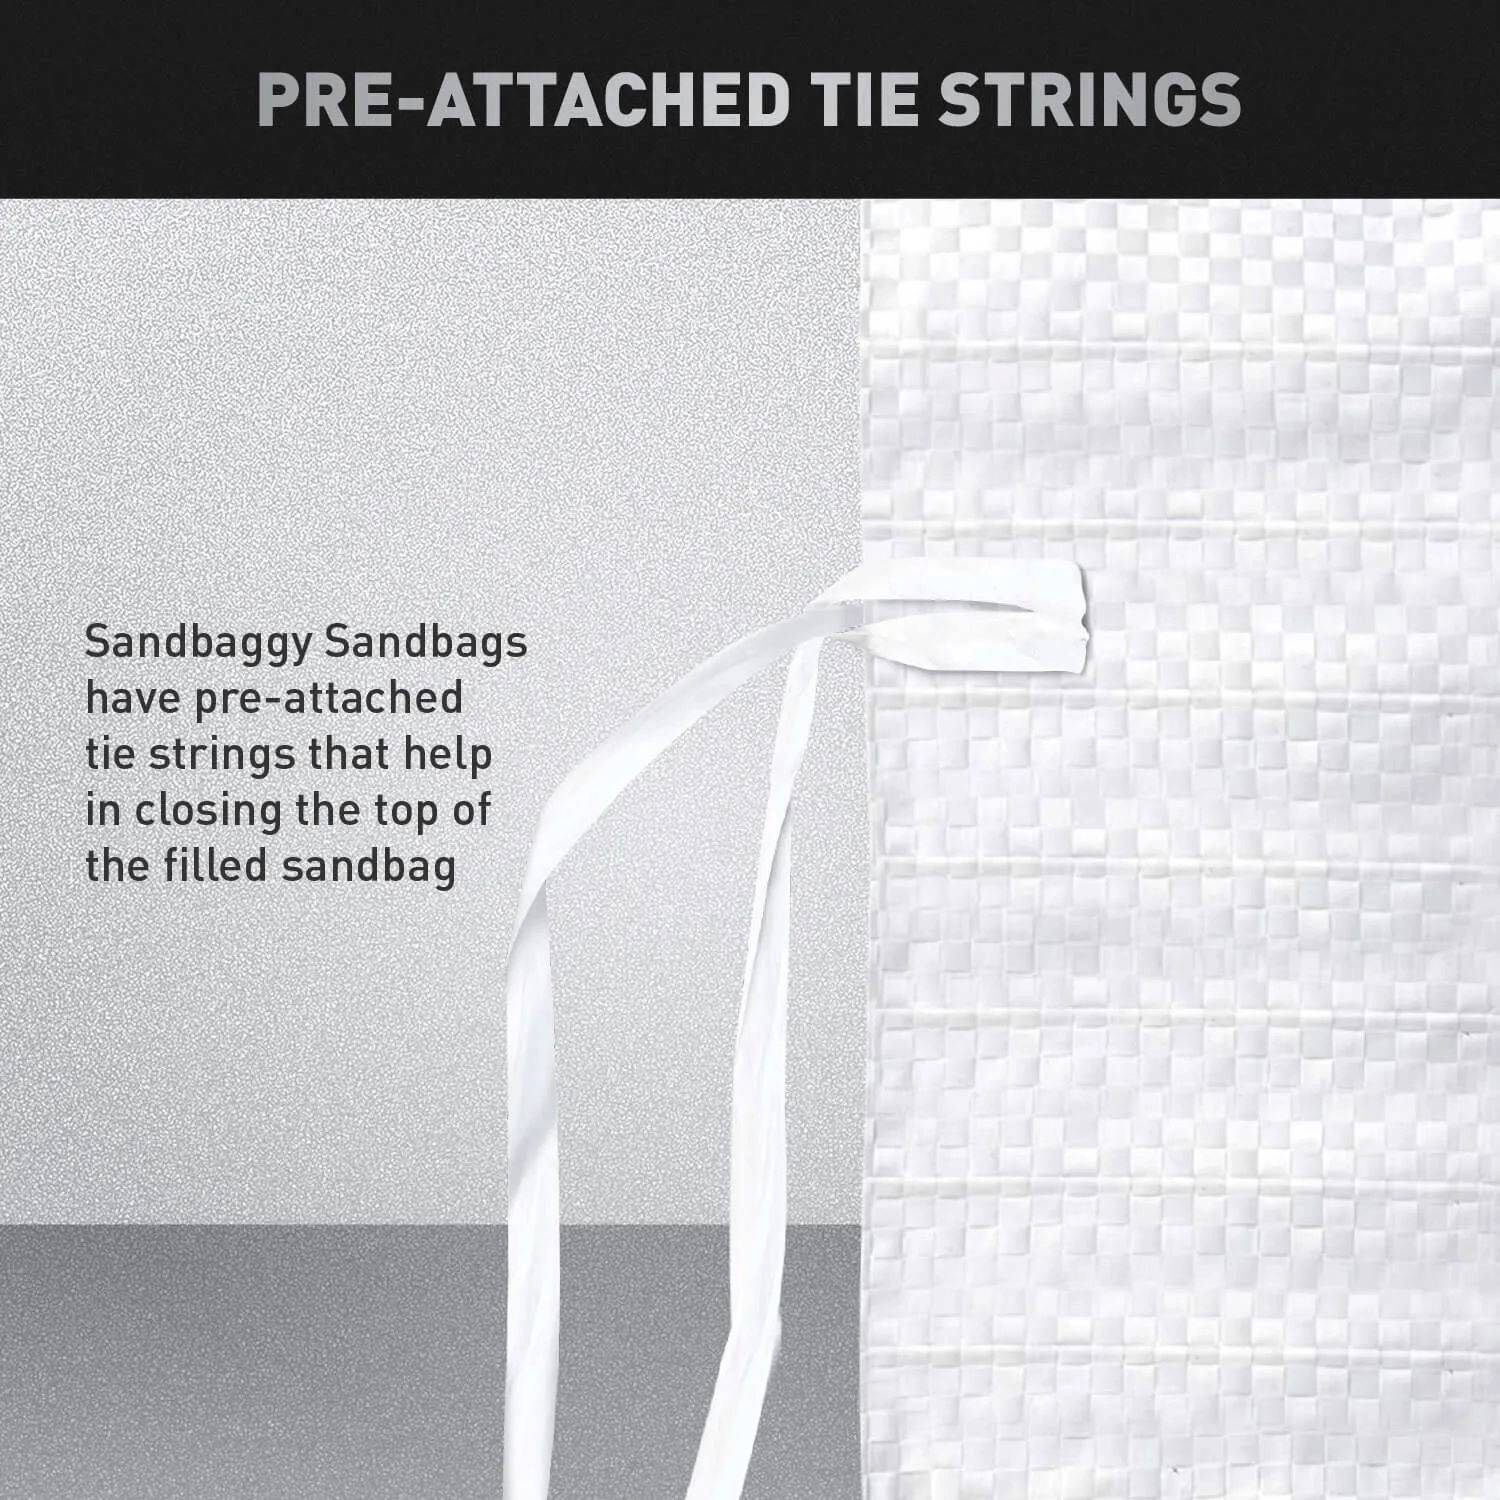 sandbags with tie strings